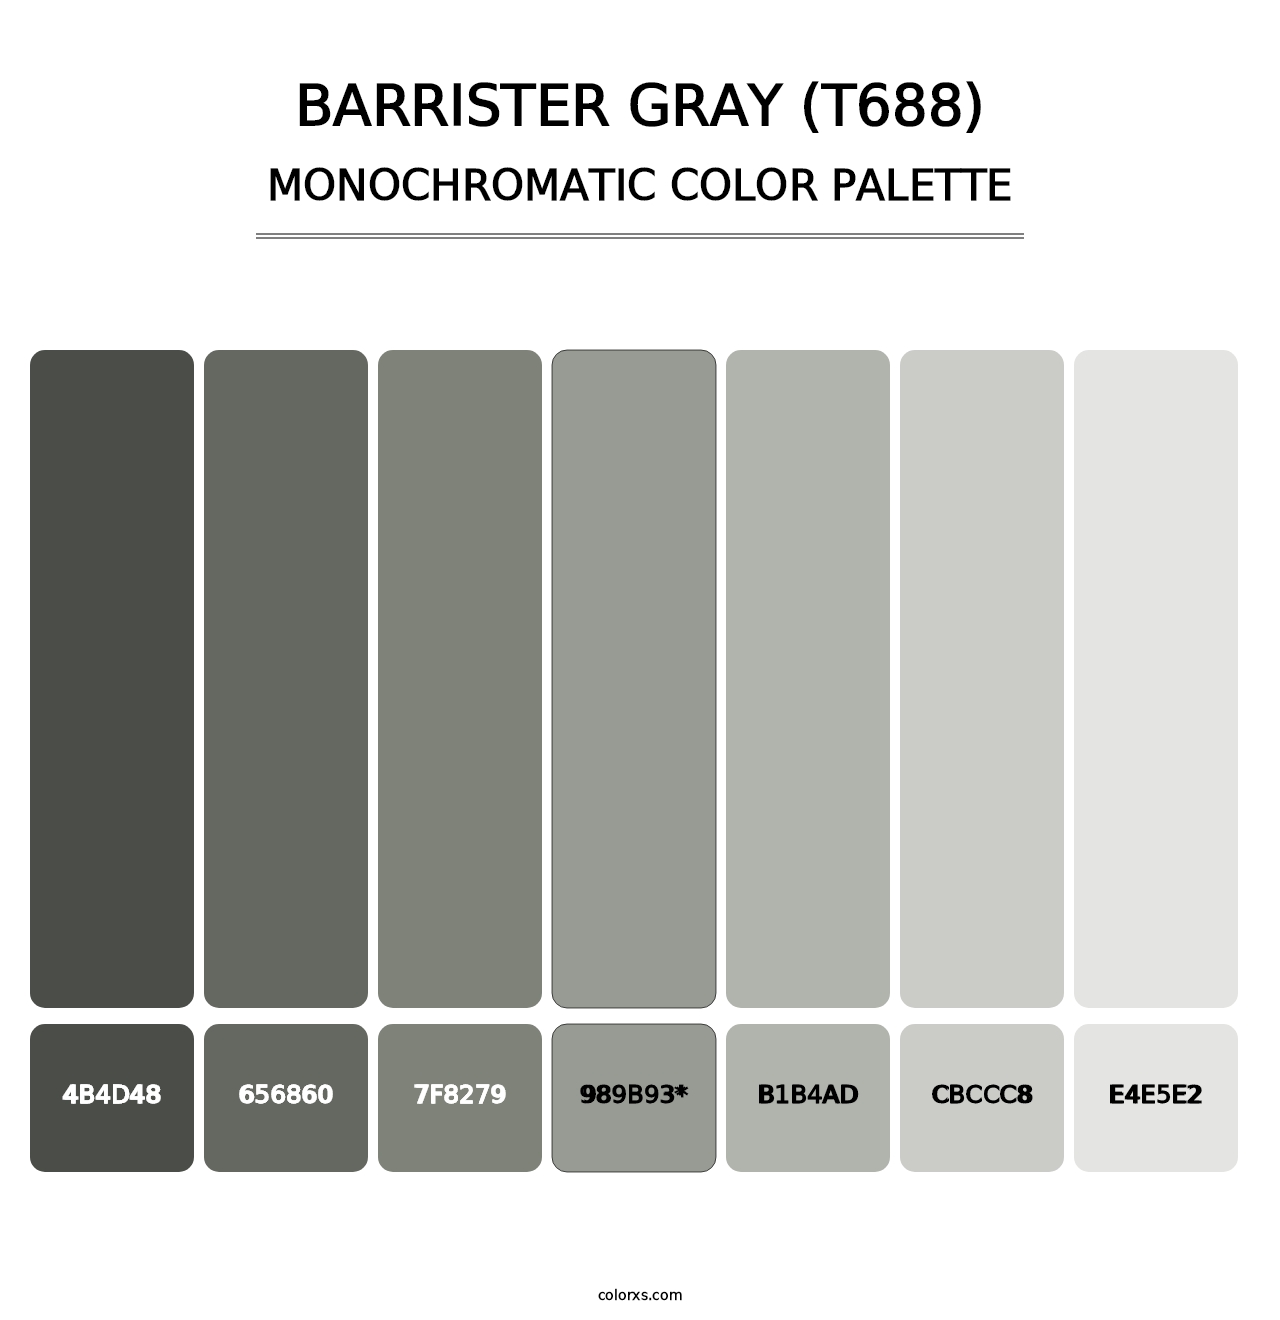 Barrister Gray (T688) - Monochromatic Color Palette